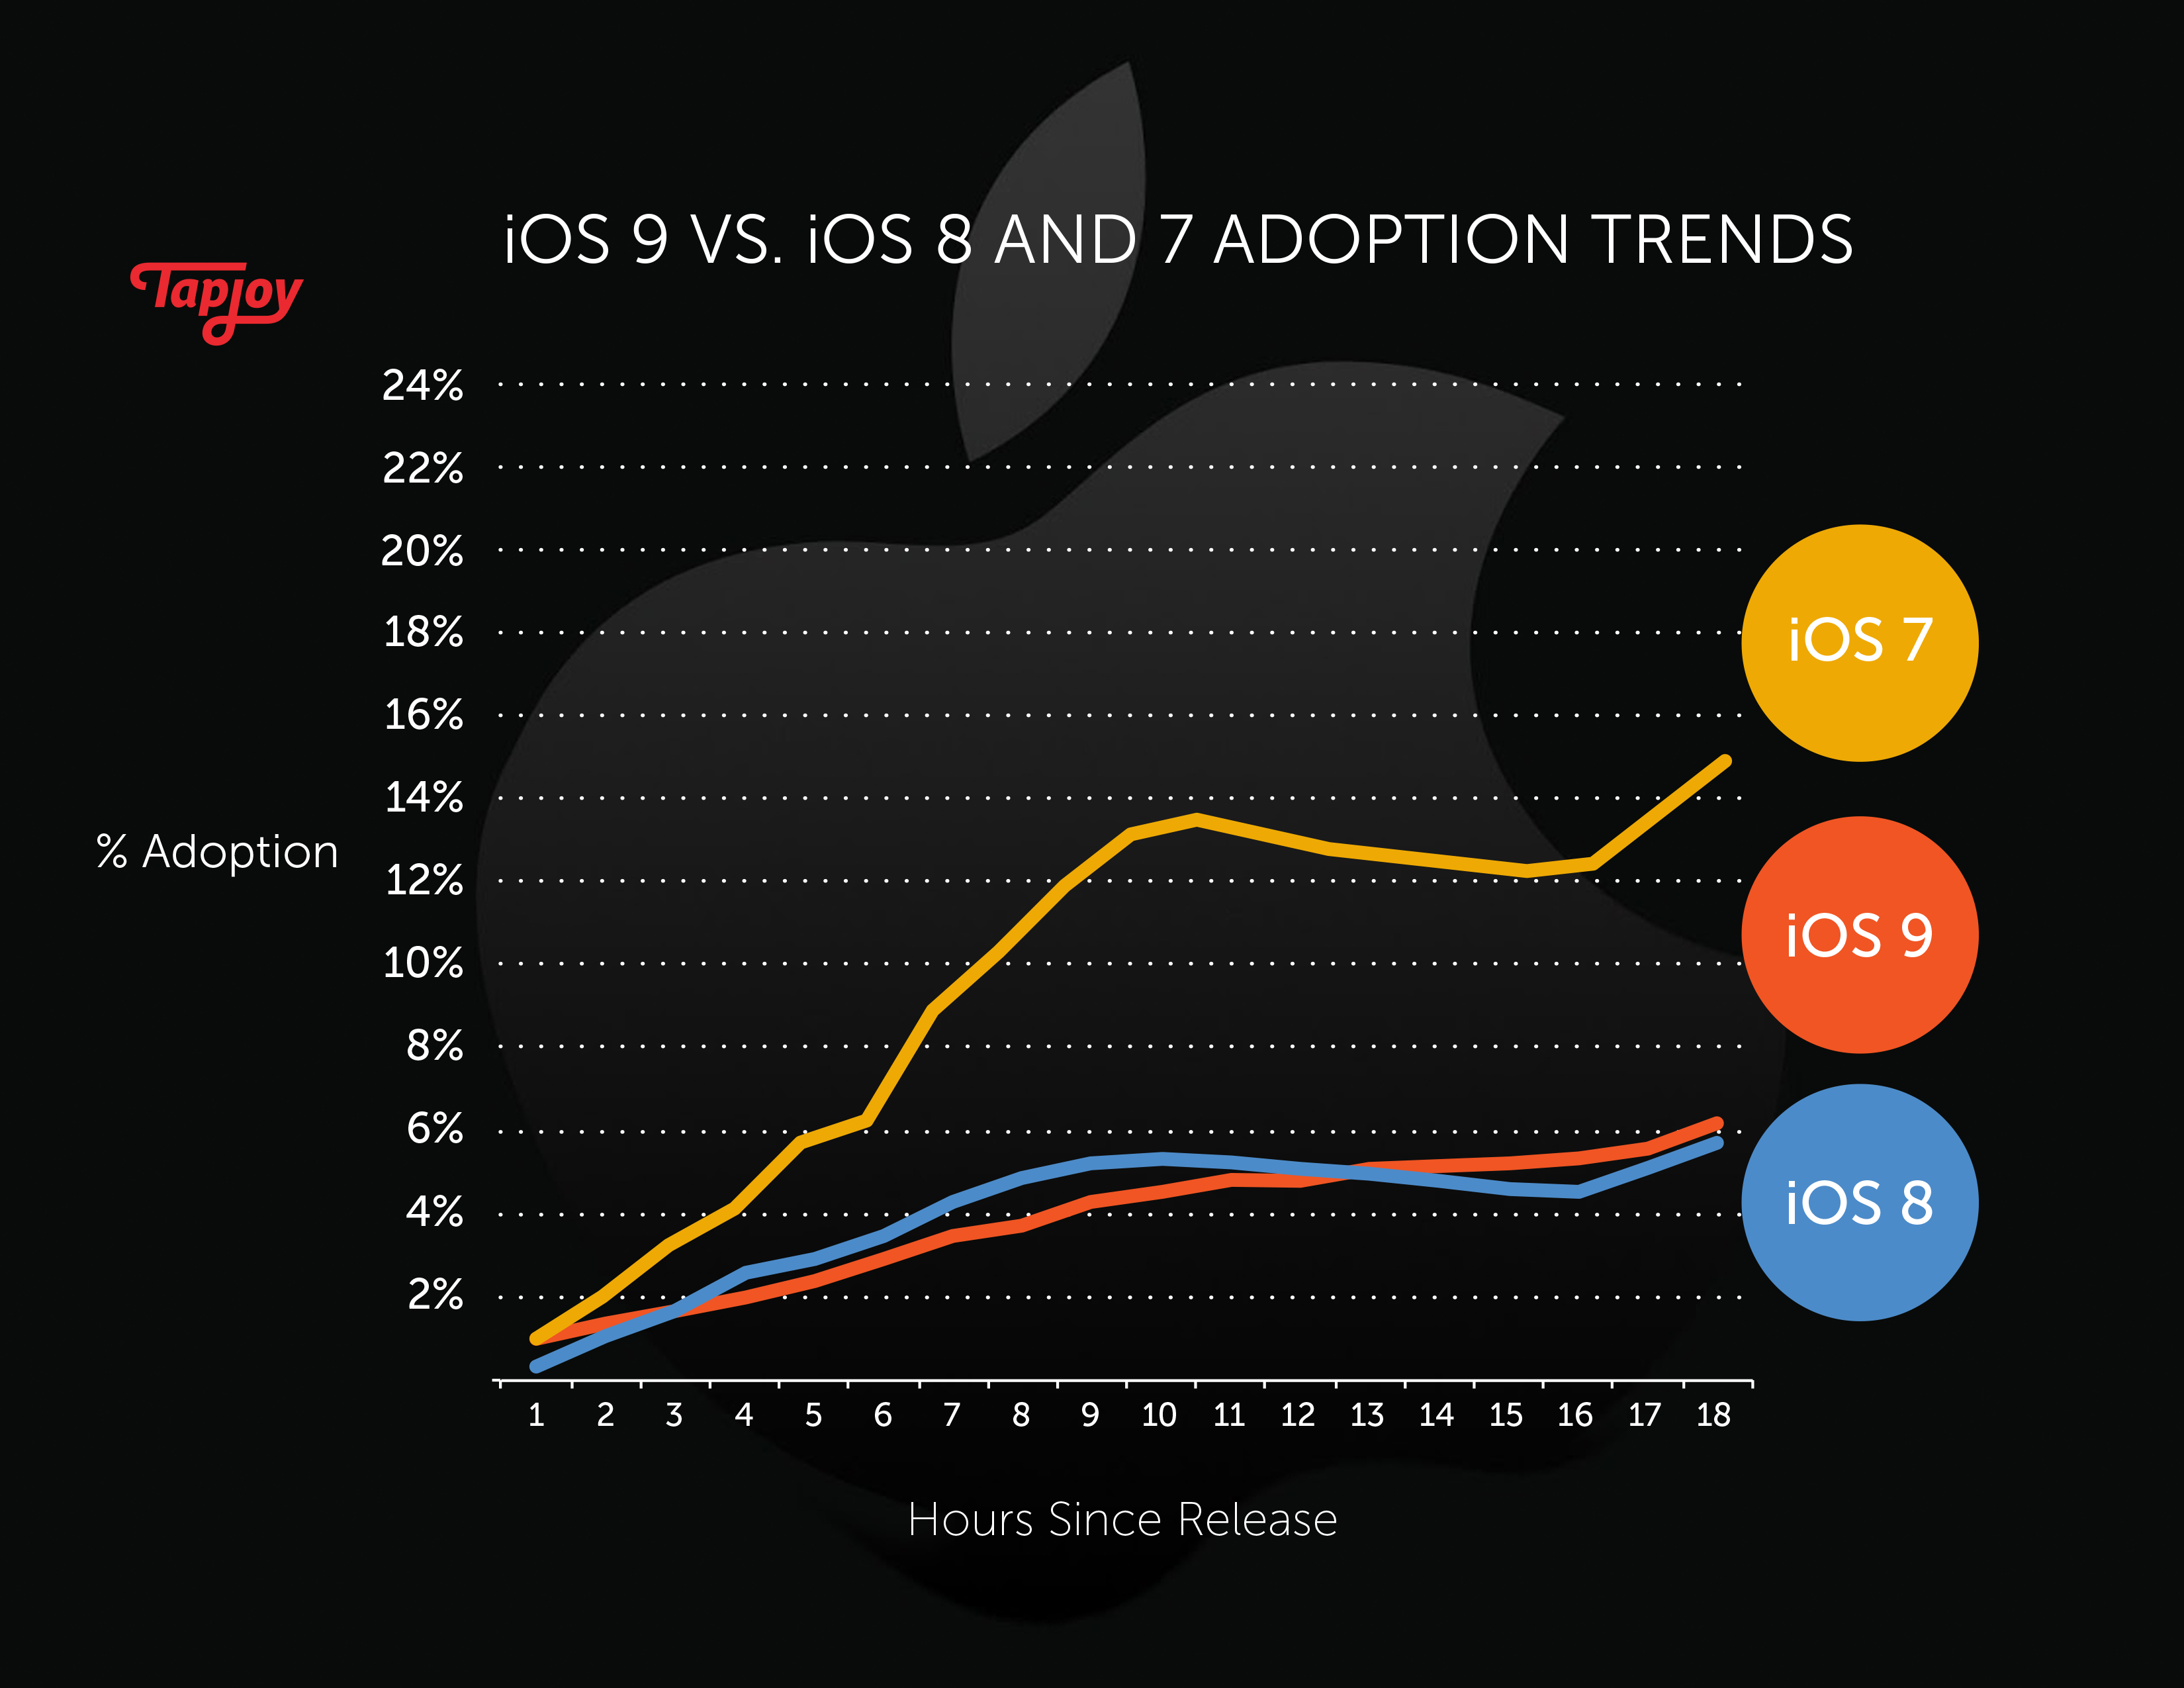 iOS 7, iOS 8, iOS 9 adoption trends